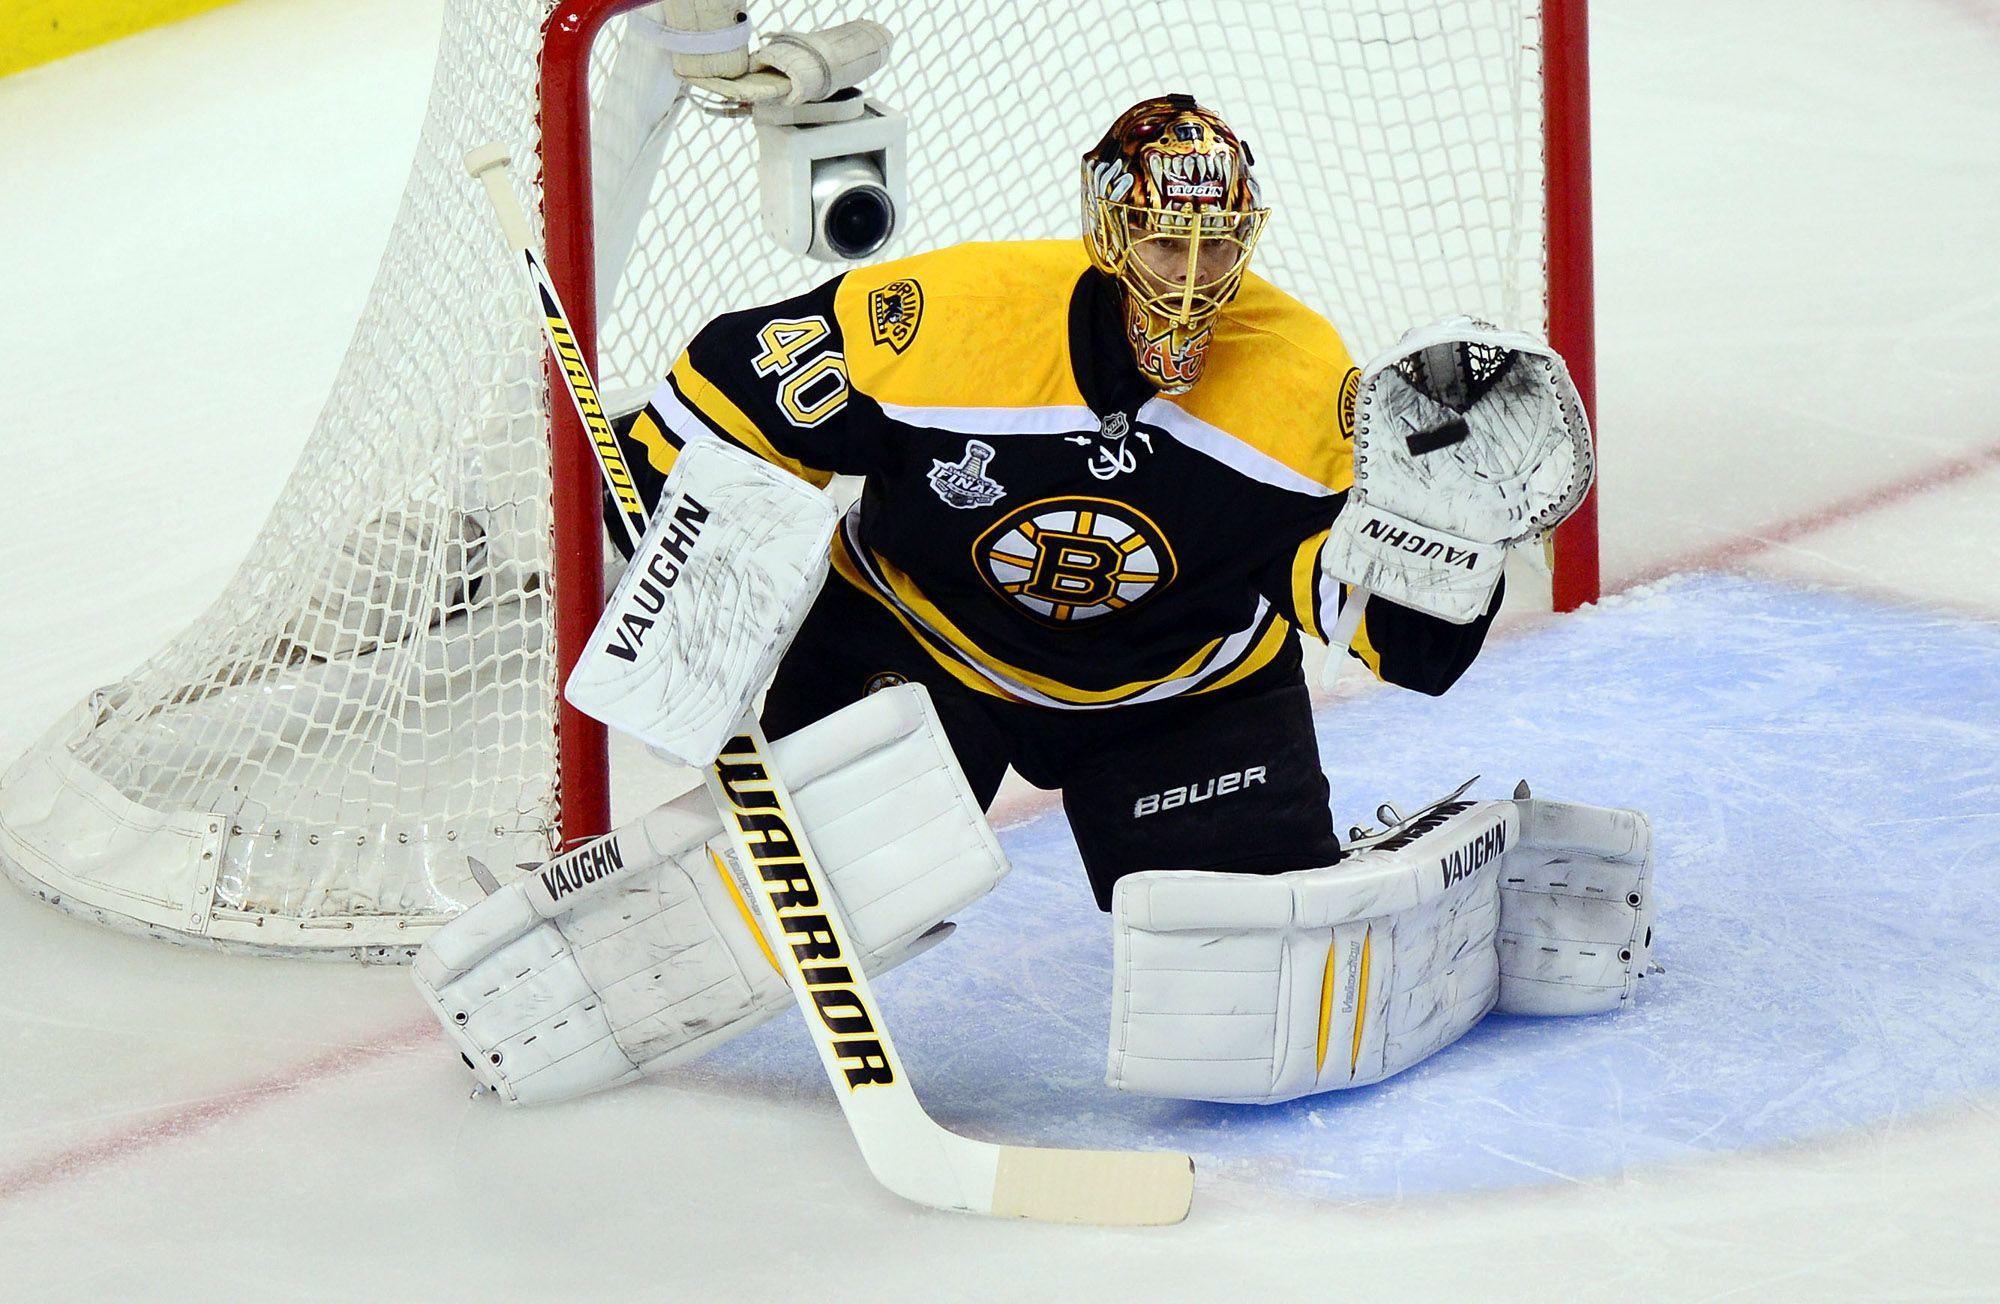 Goalie Tuukka Rask is coming up huge for the Bruins. Sports on Earth